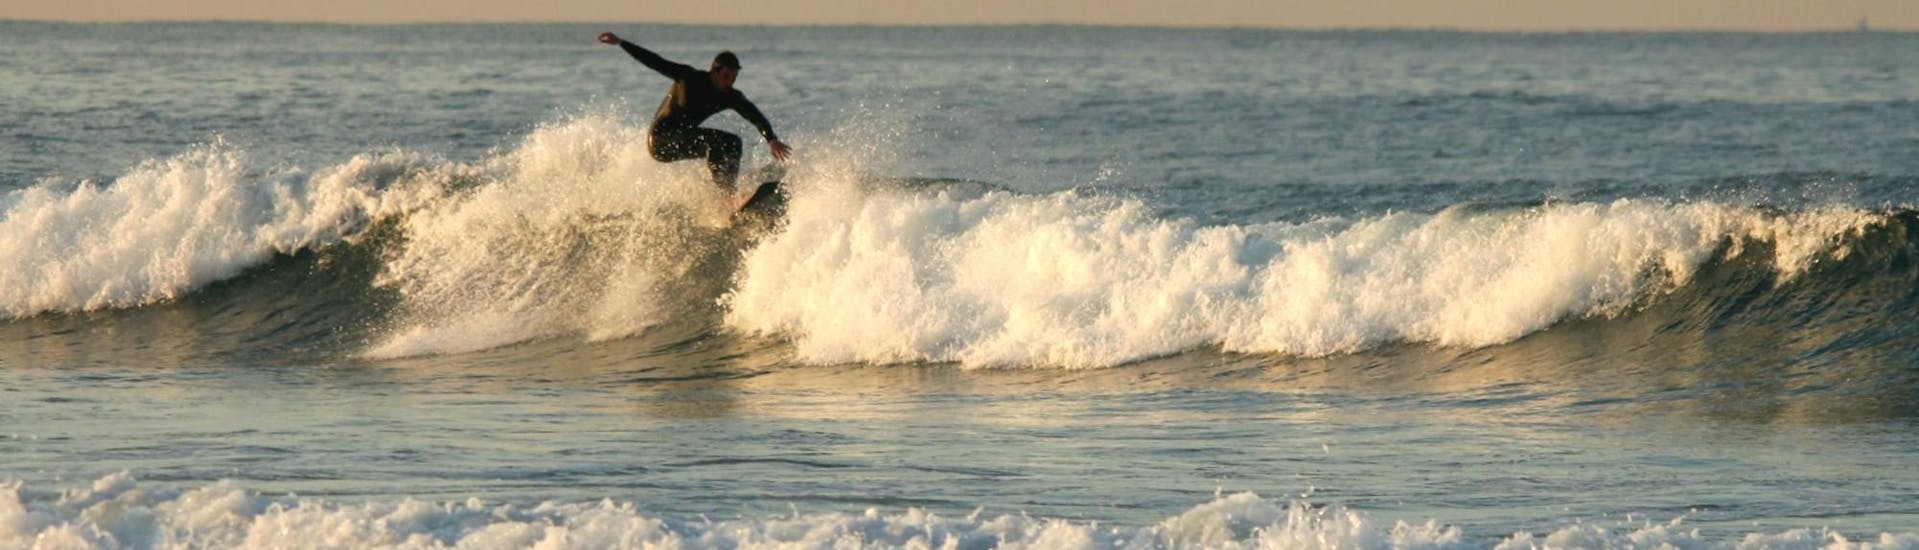 Privater Surfkurs in Matosinhos (ab 5 J.) für alle Levels.